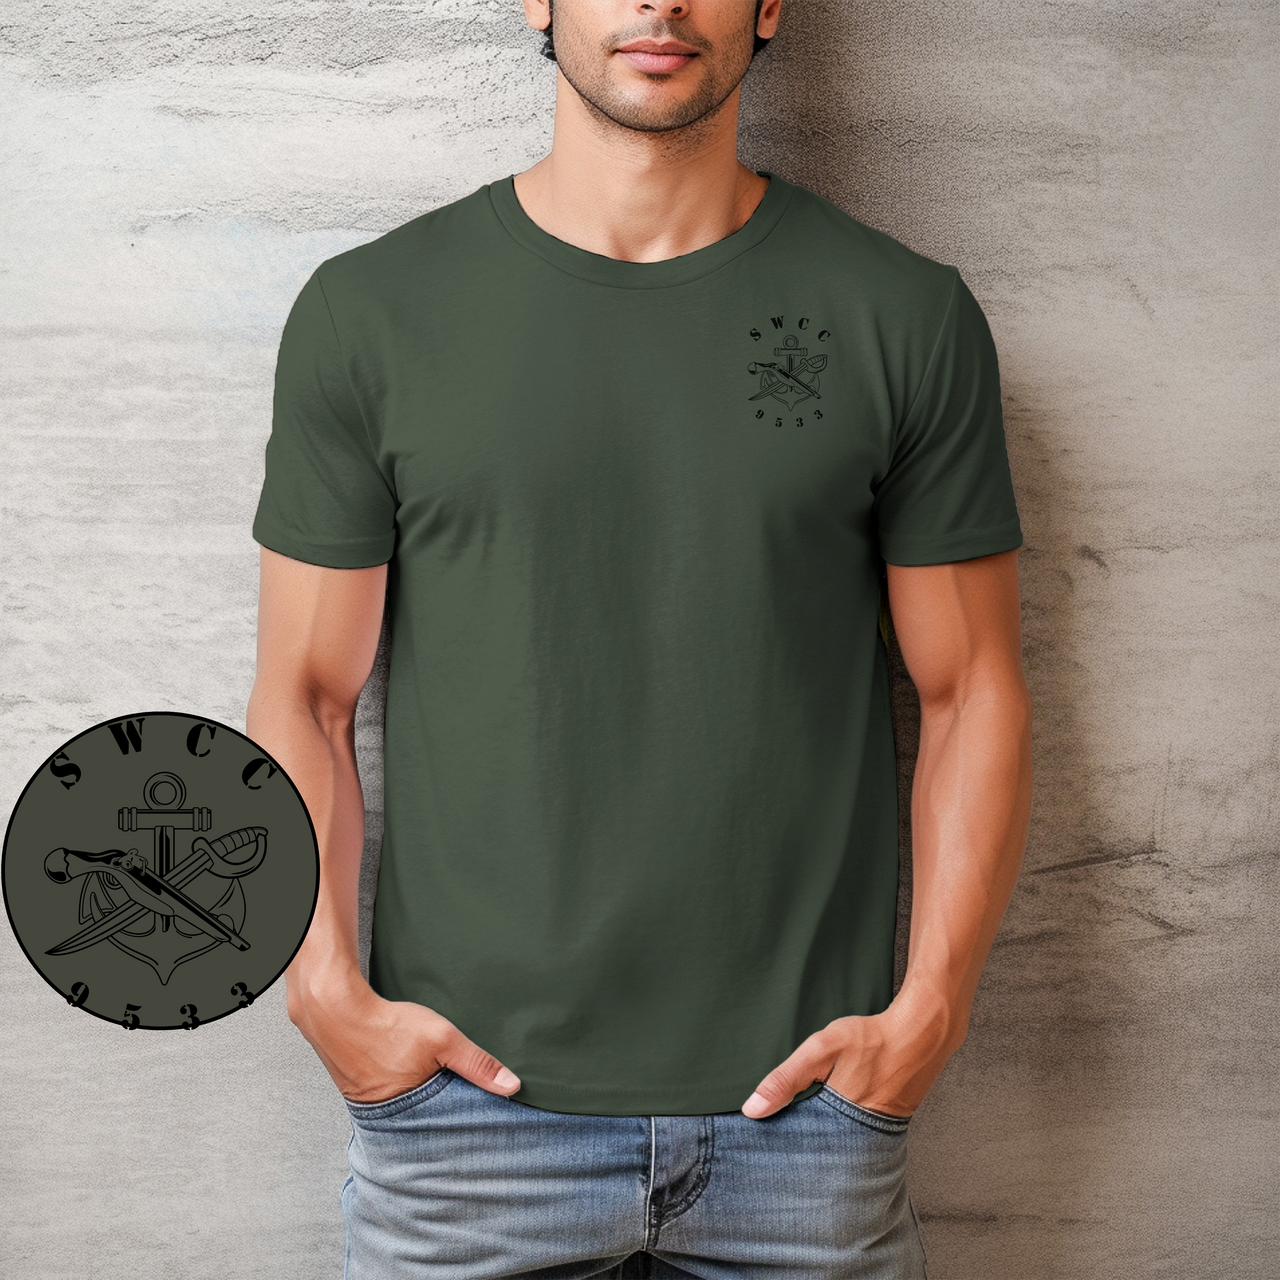 Special Warfare Combatant Craft Crewmen, 9533, T-Shirt (Black)